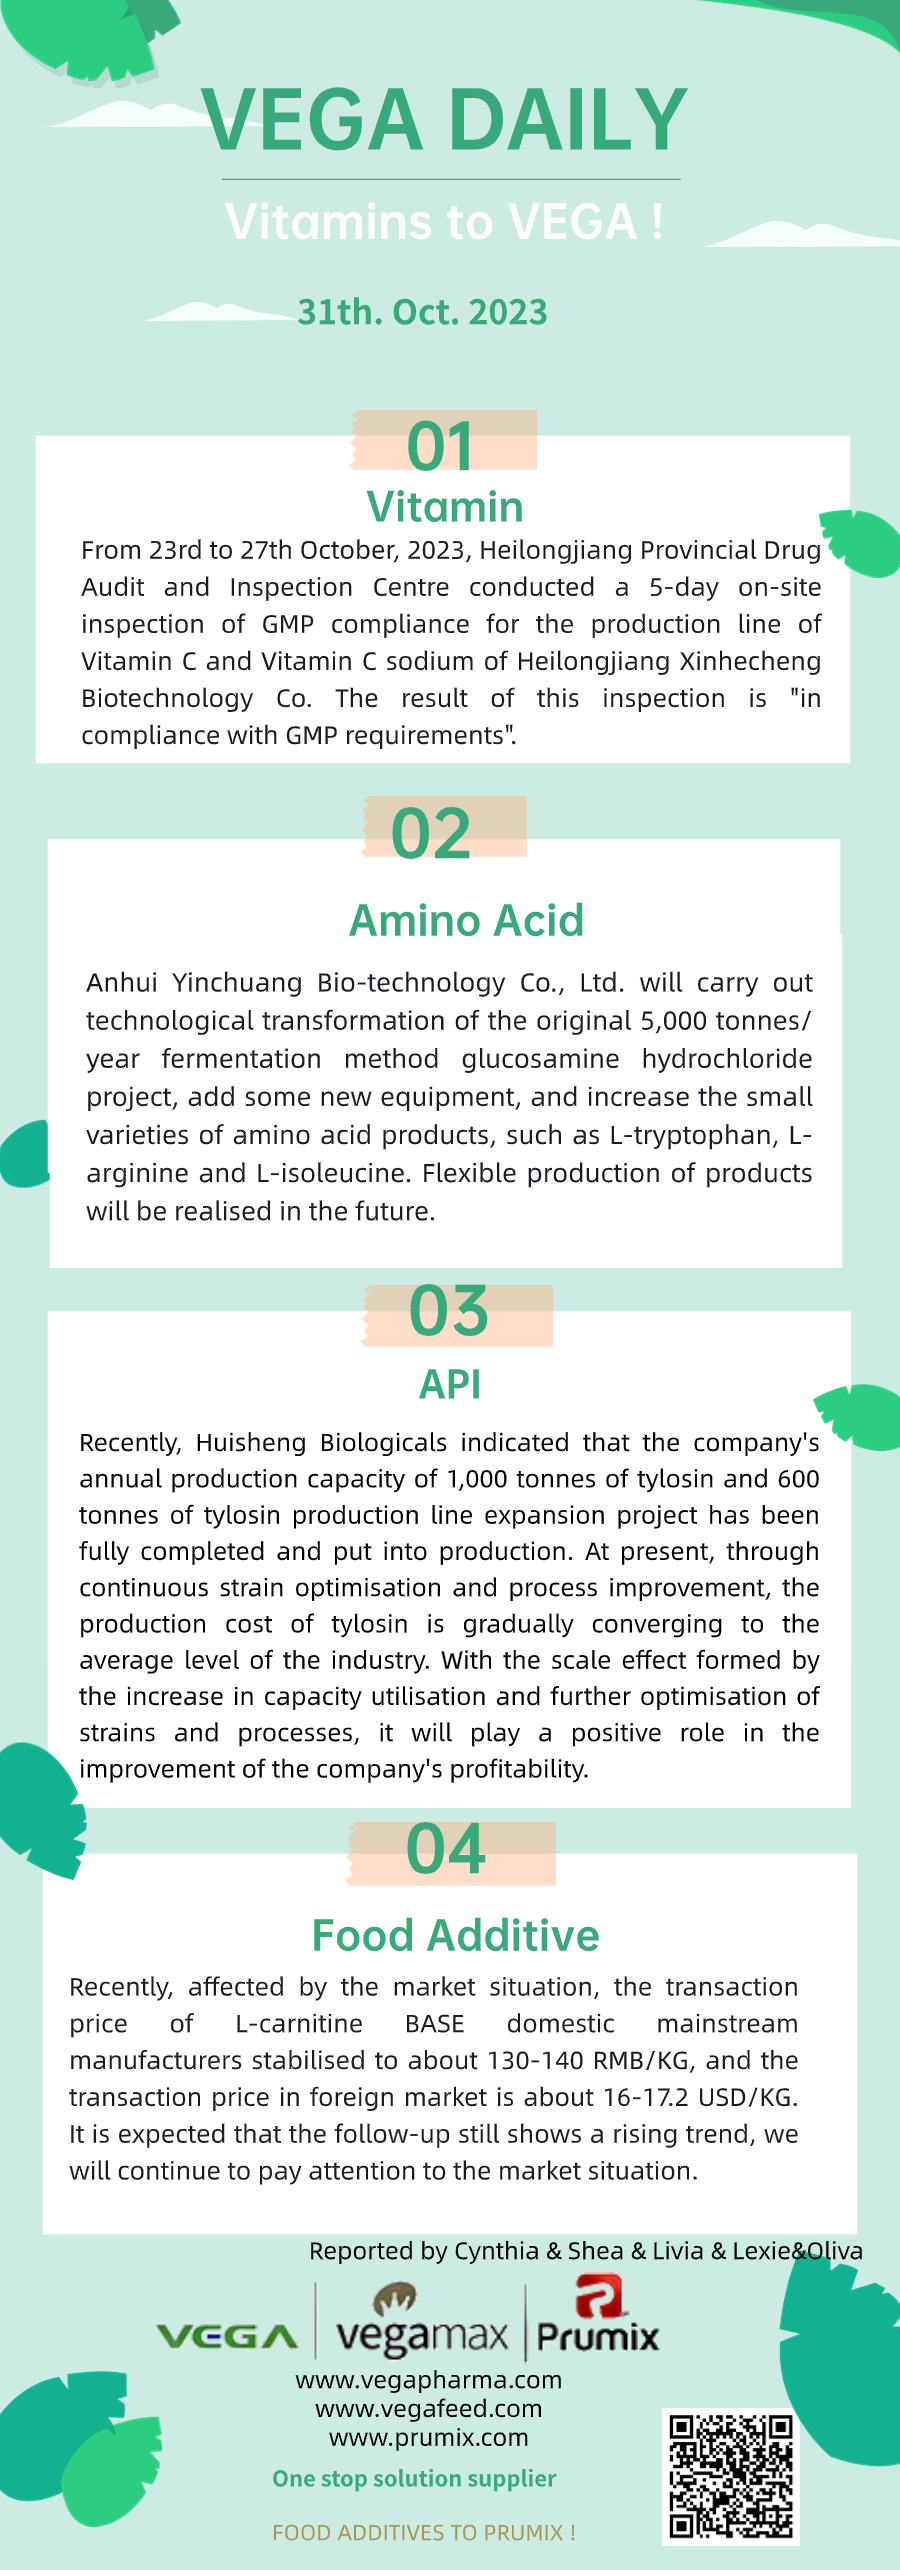 Vega Daily Dated on Oct 31st 2023 Vitamin Amino Acid API Food Additives.jpg